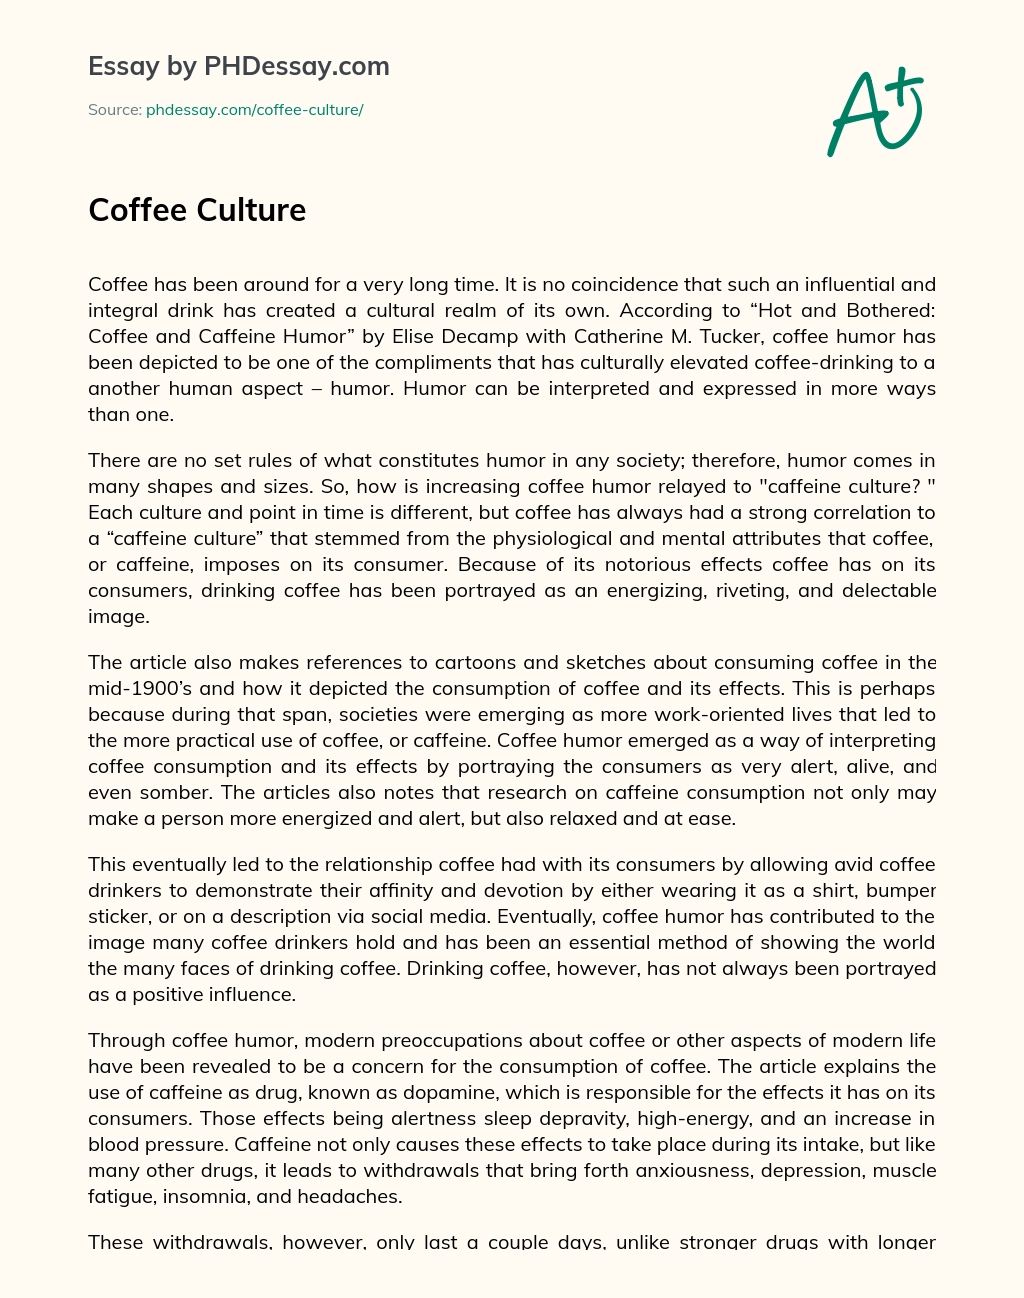 Coffee Culture essay